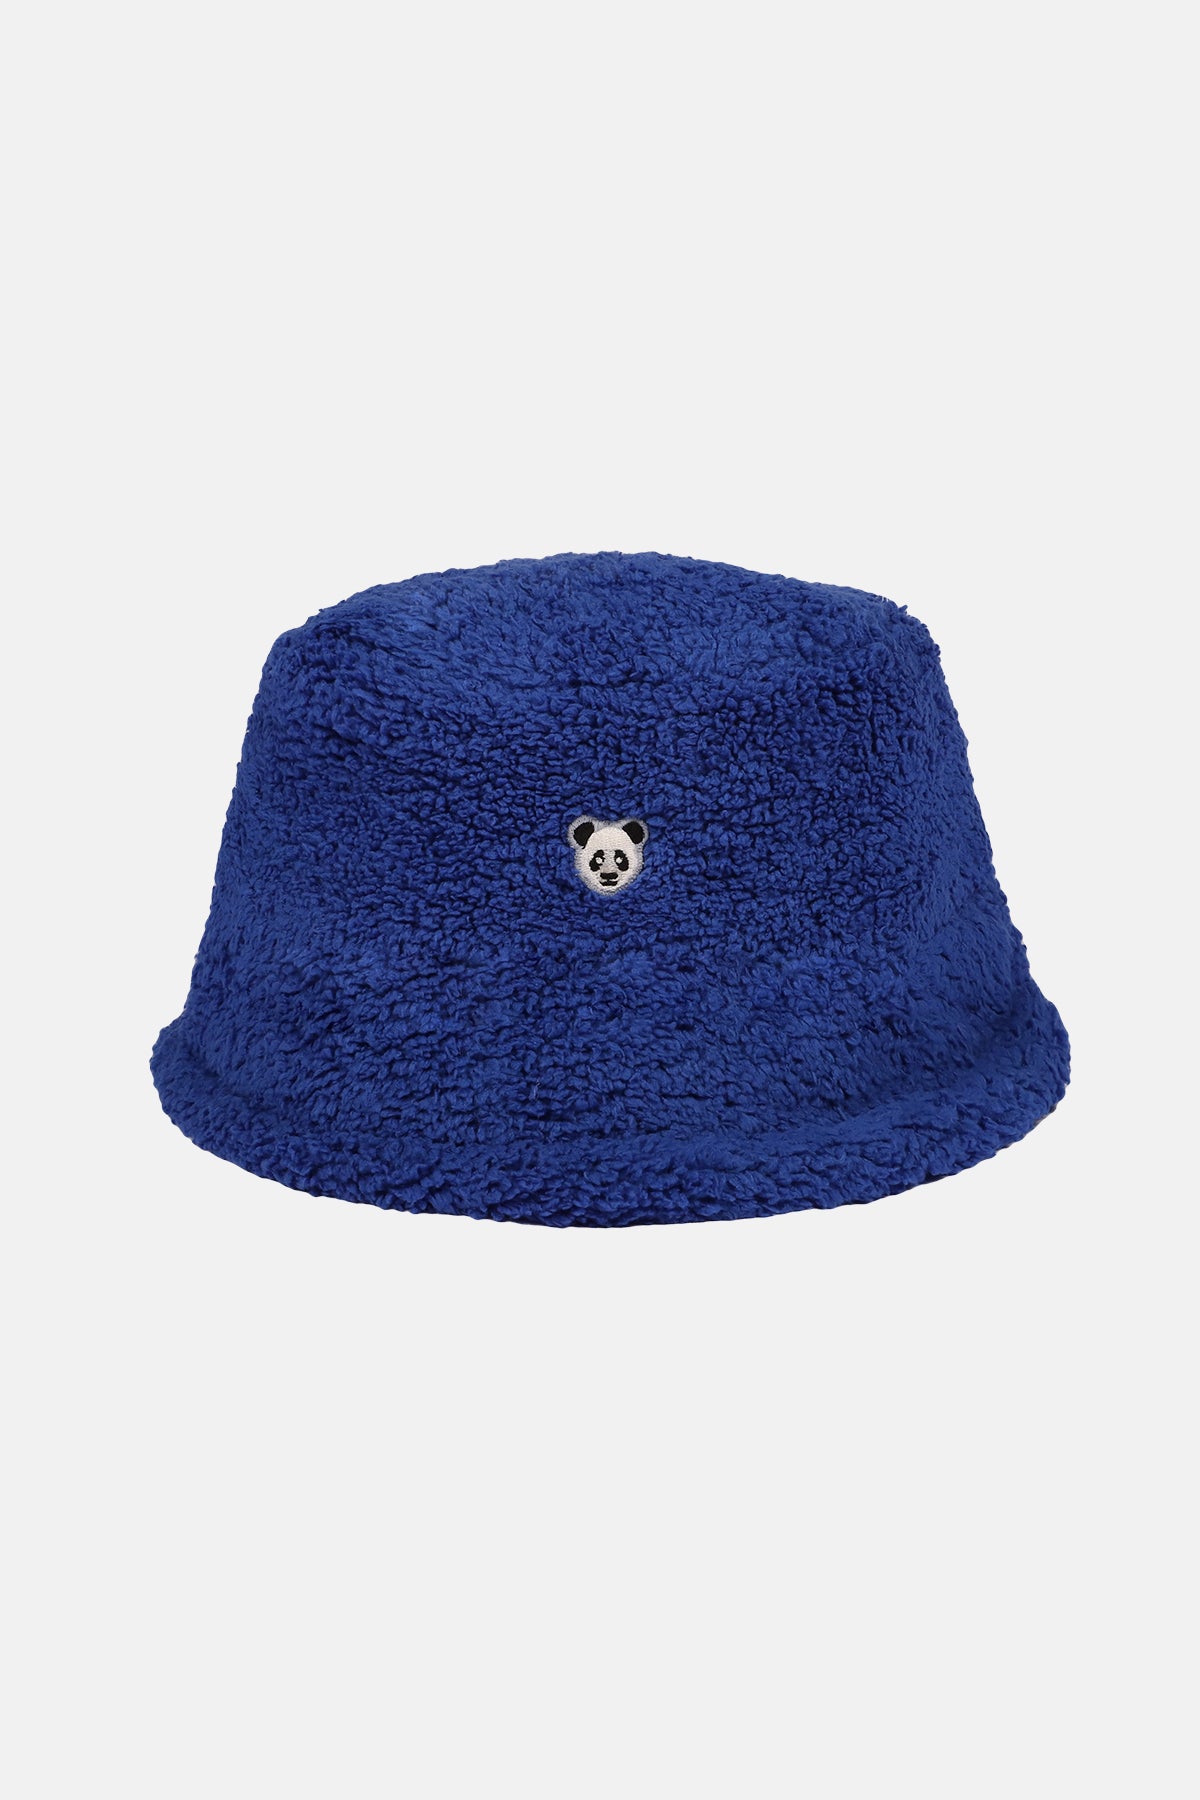 Reflect Studio // Sherpa Bucket Hat // Panda // Blau